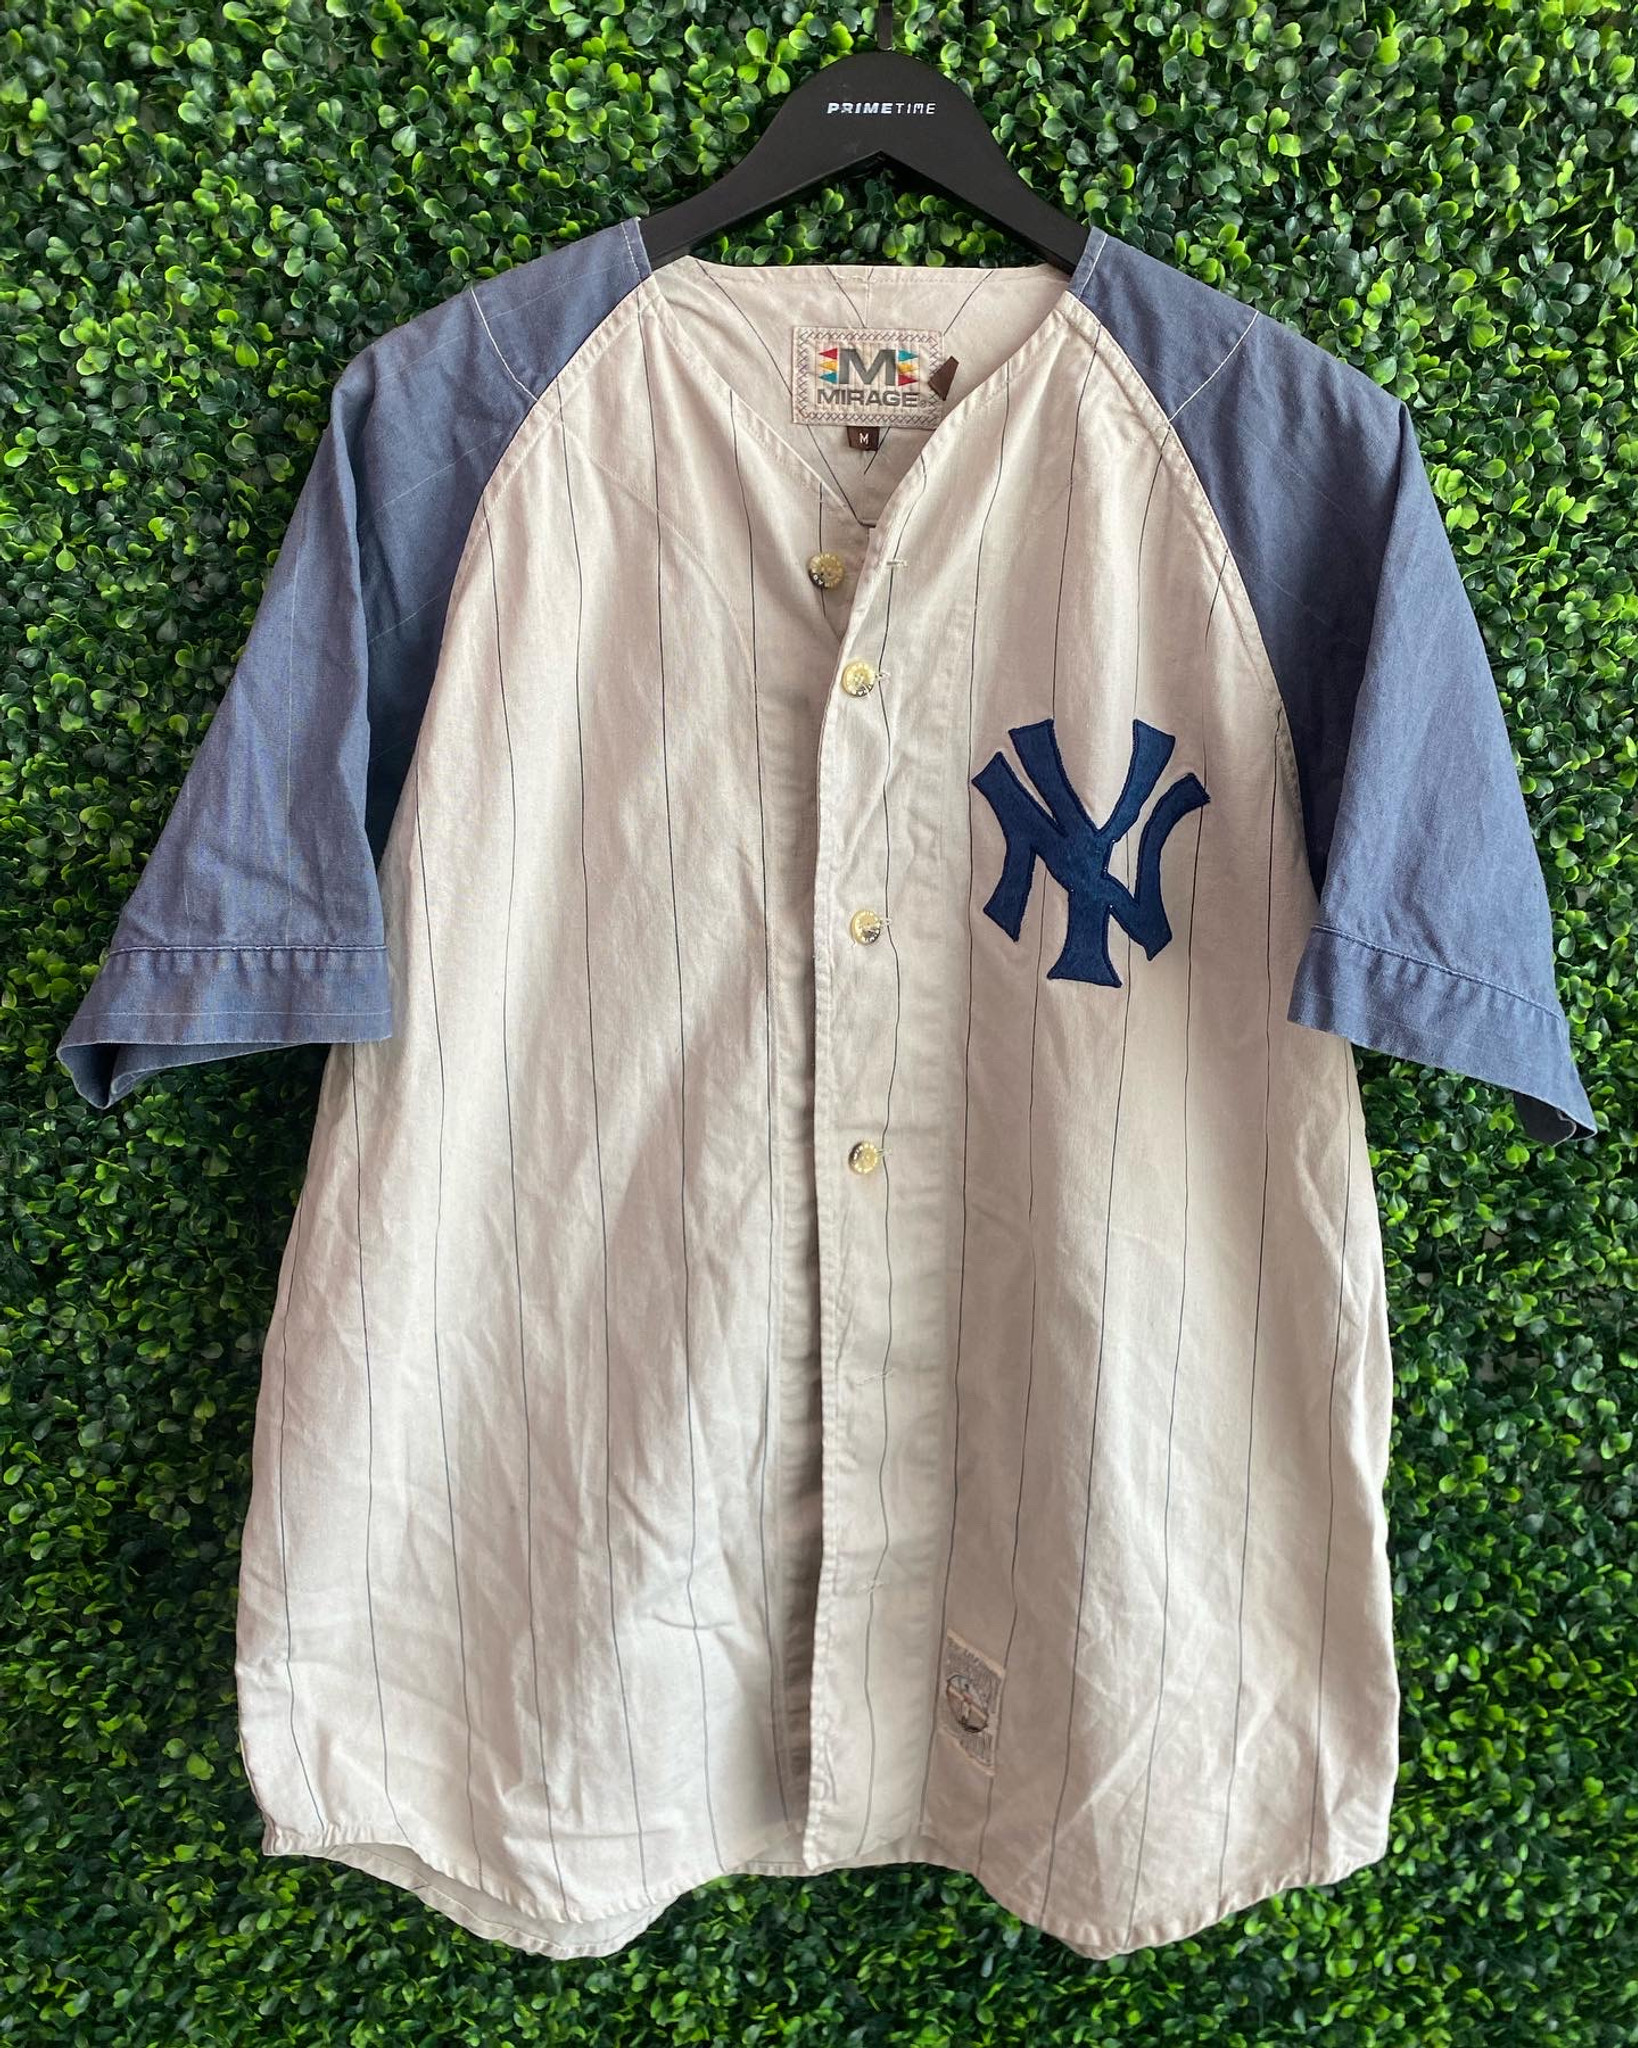 Mickey Mantle New York Yankees Jersey – Classic Authentics